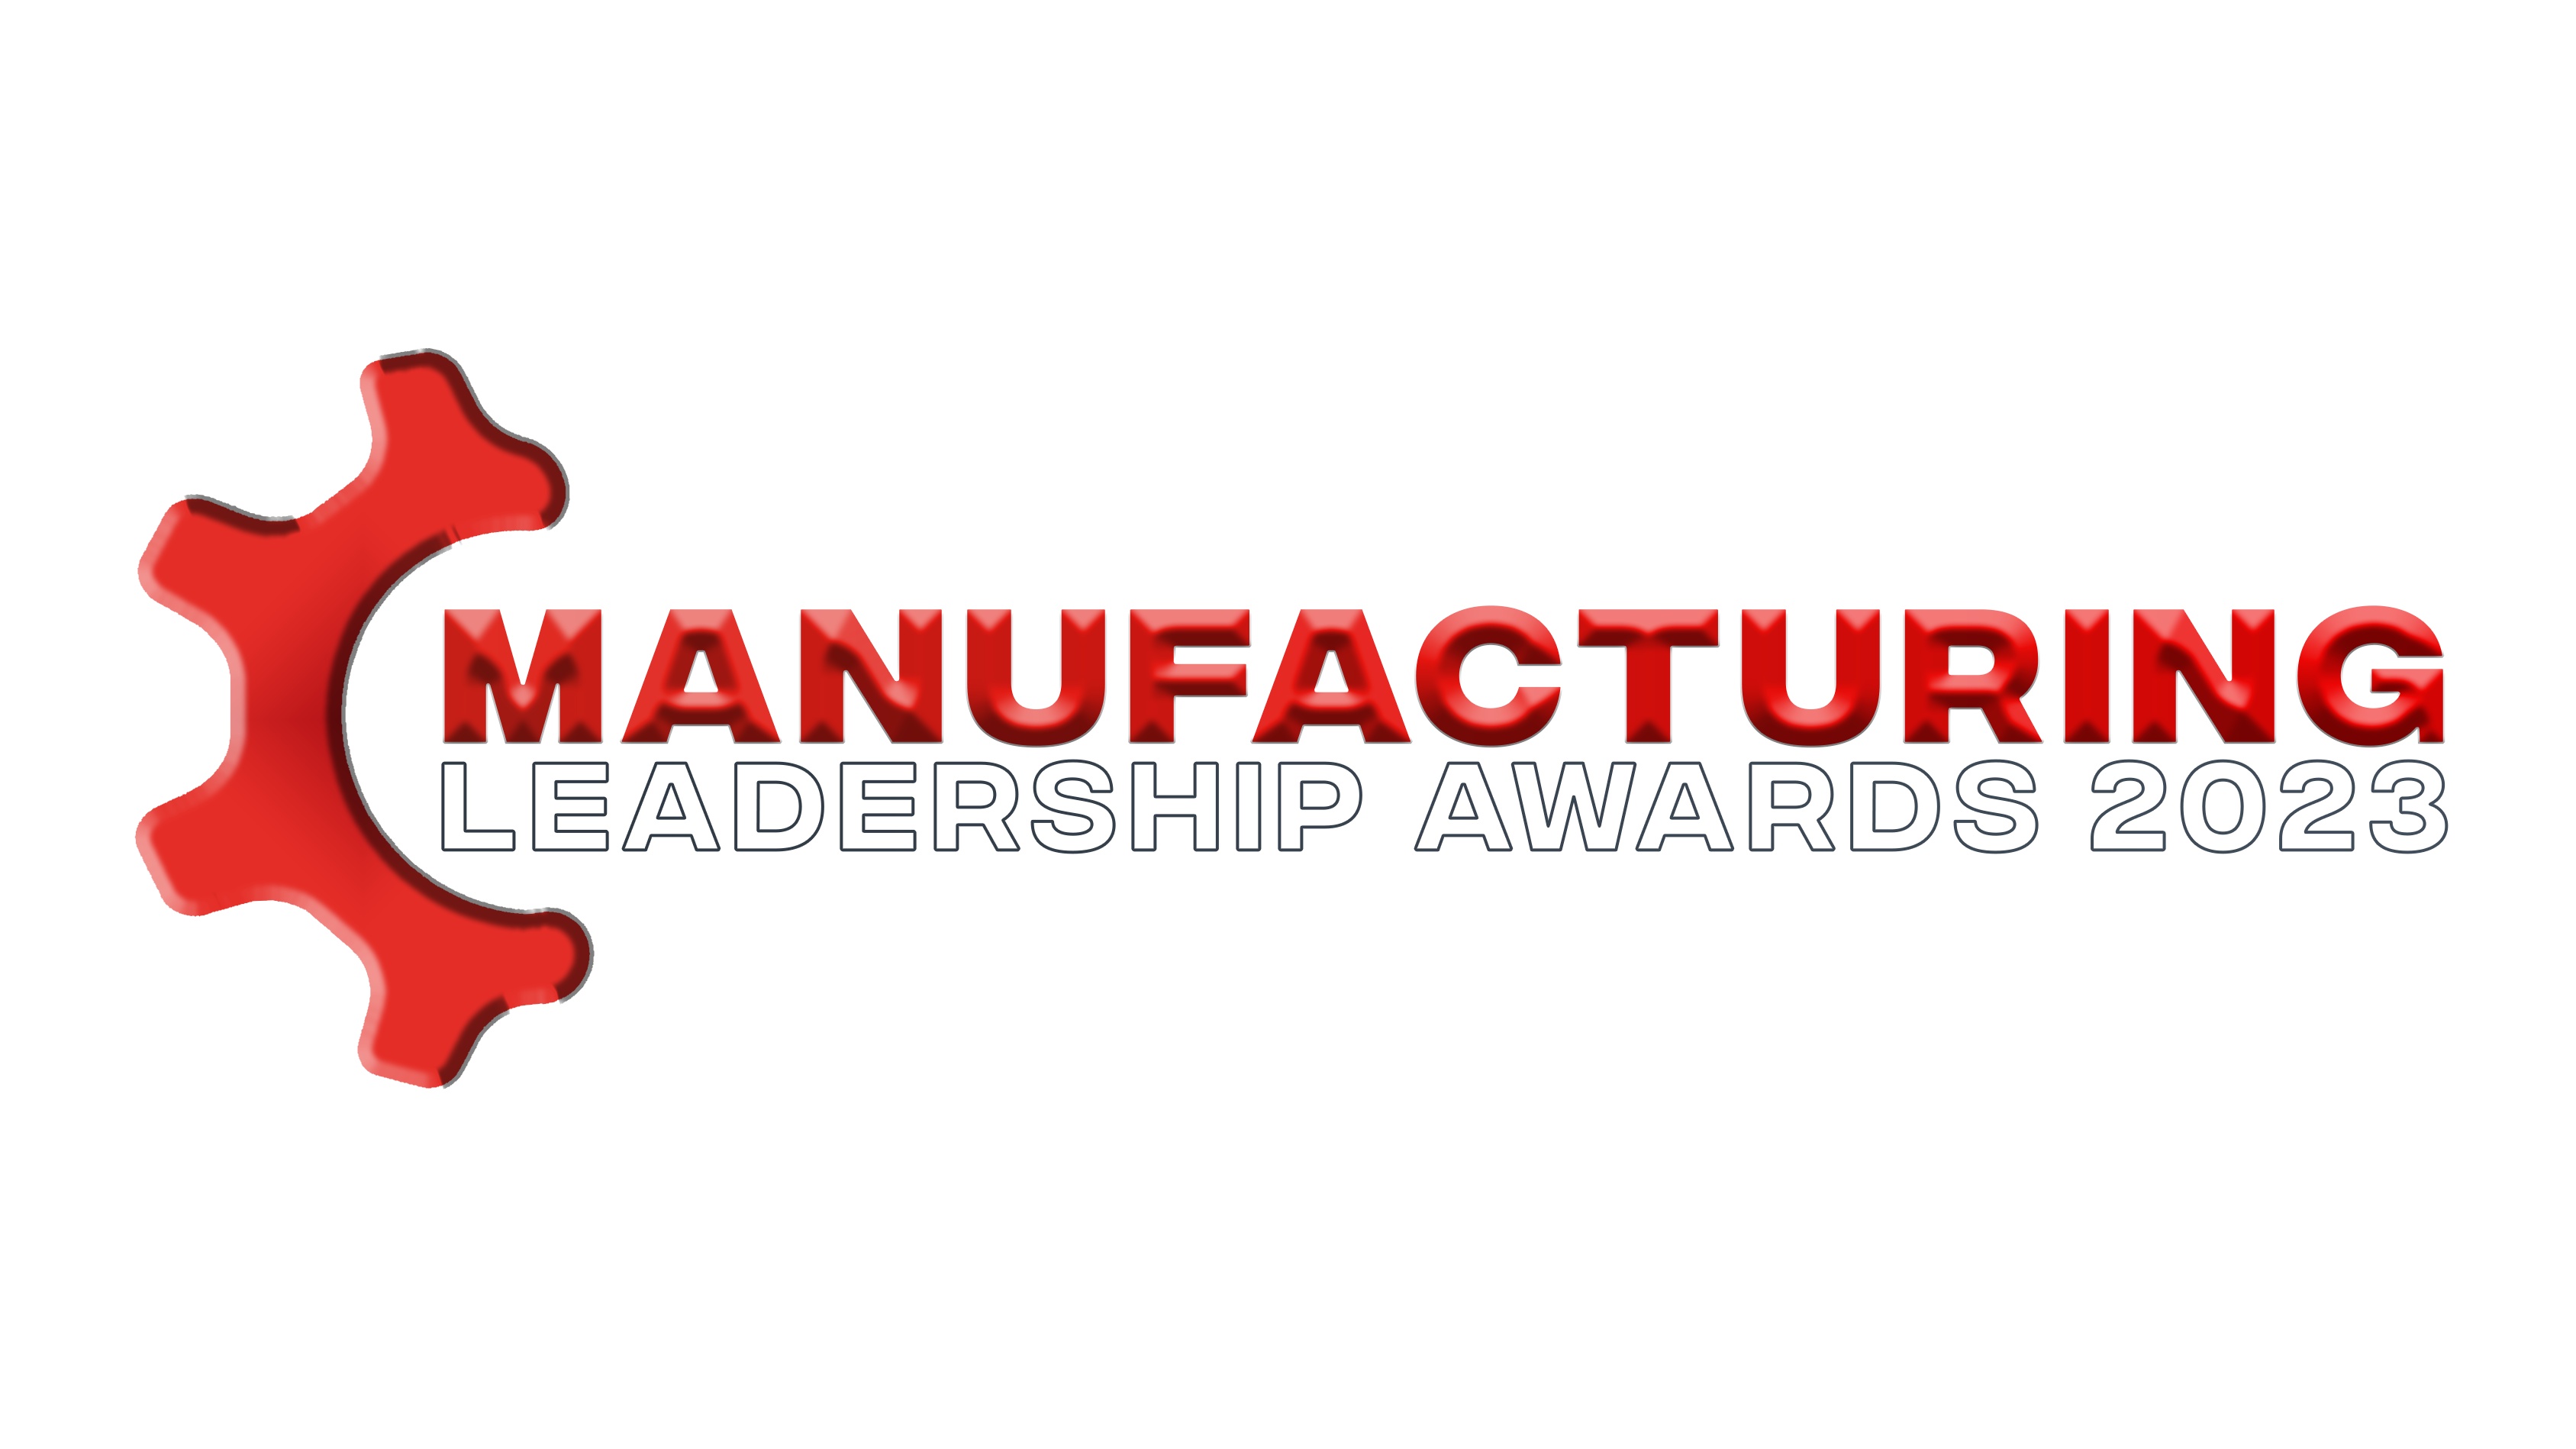 Manufacturing Leadership Awards 2023 SponsorMyEvent